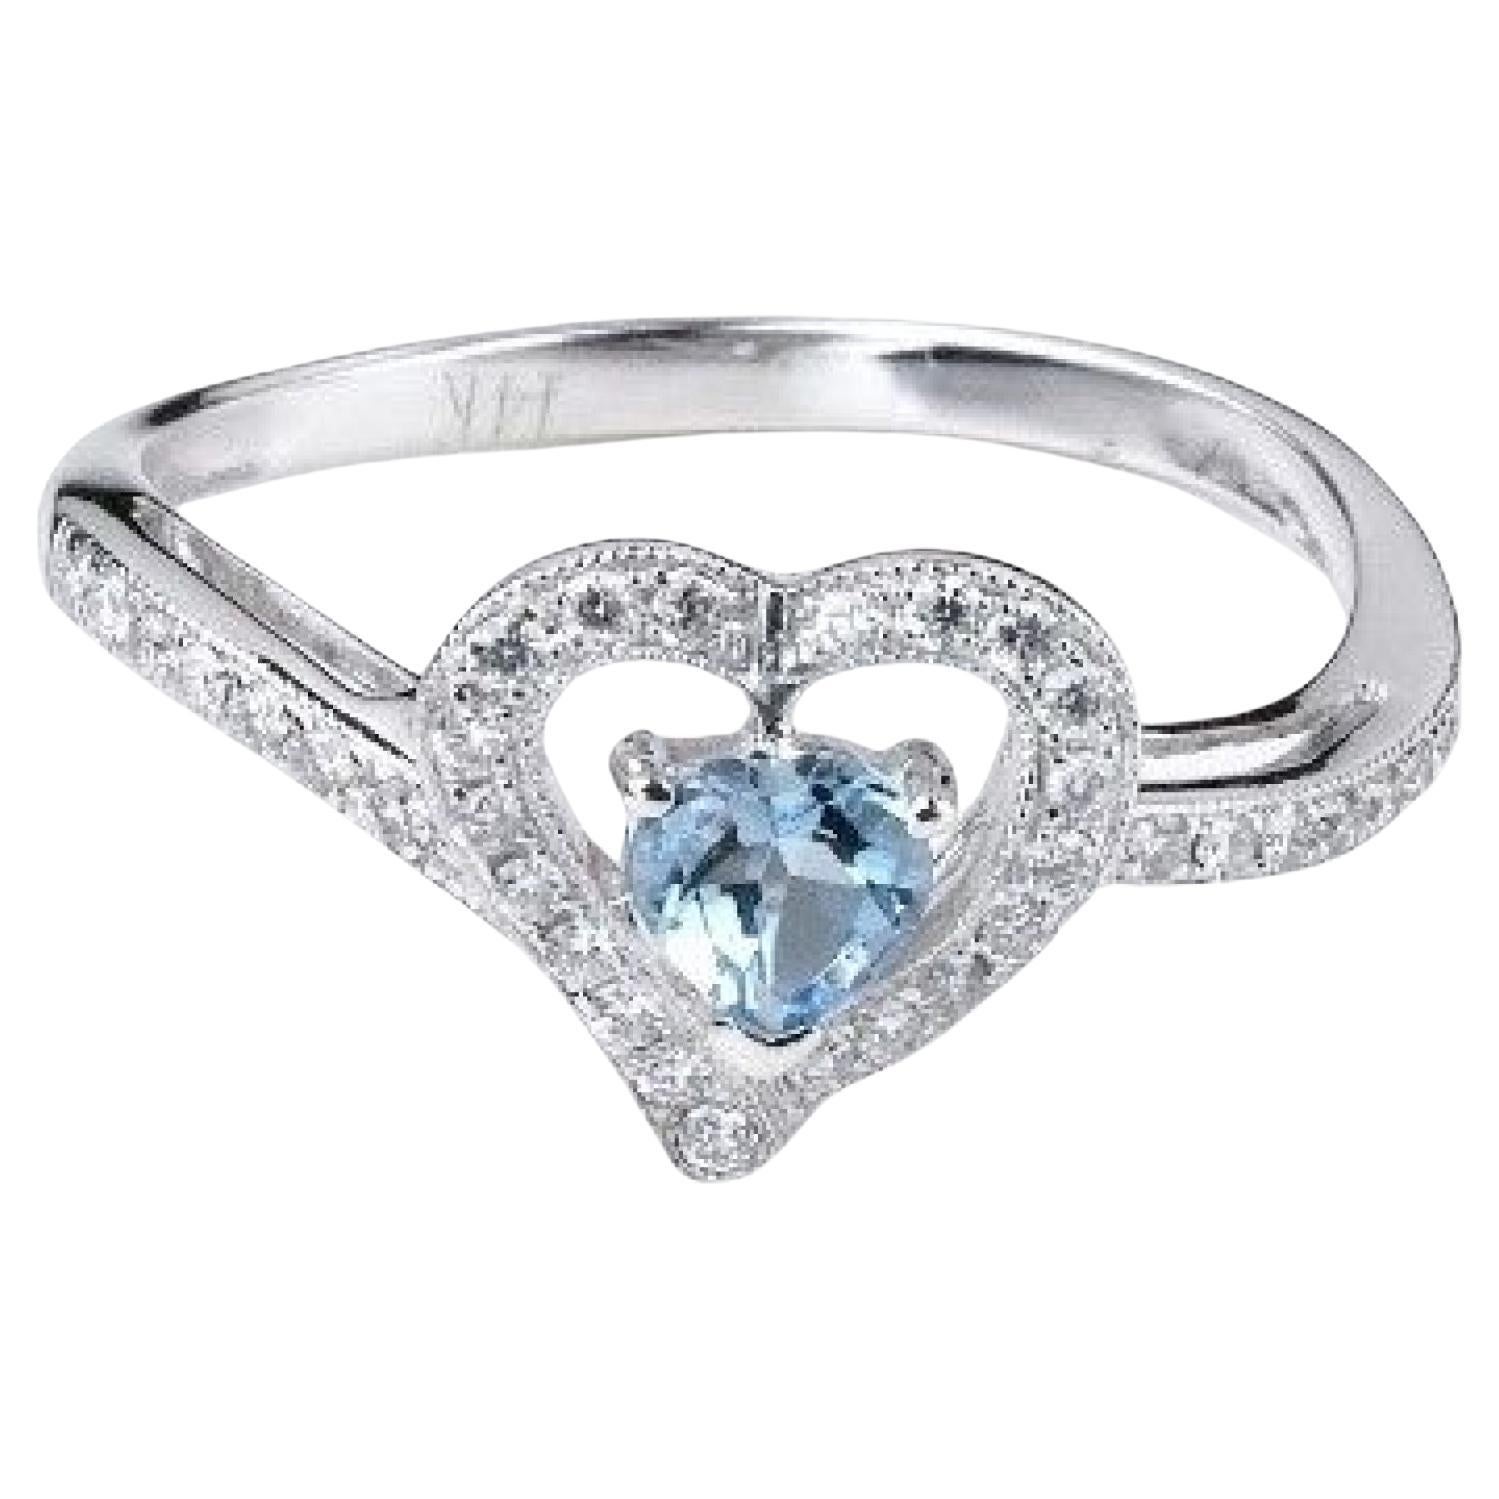 For Sale:  0.265 Carat Aquamarine and Diamond Heart Ring in 14 Karat White Gold